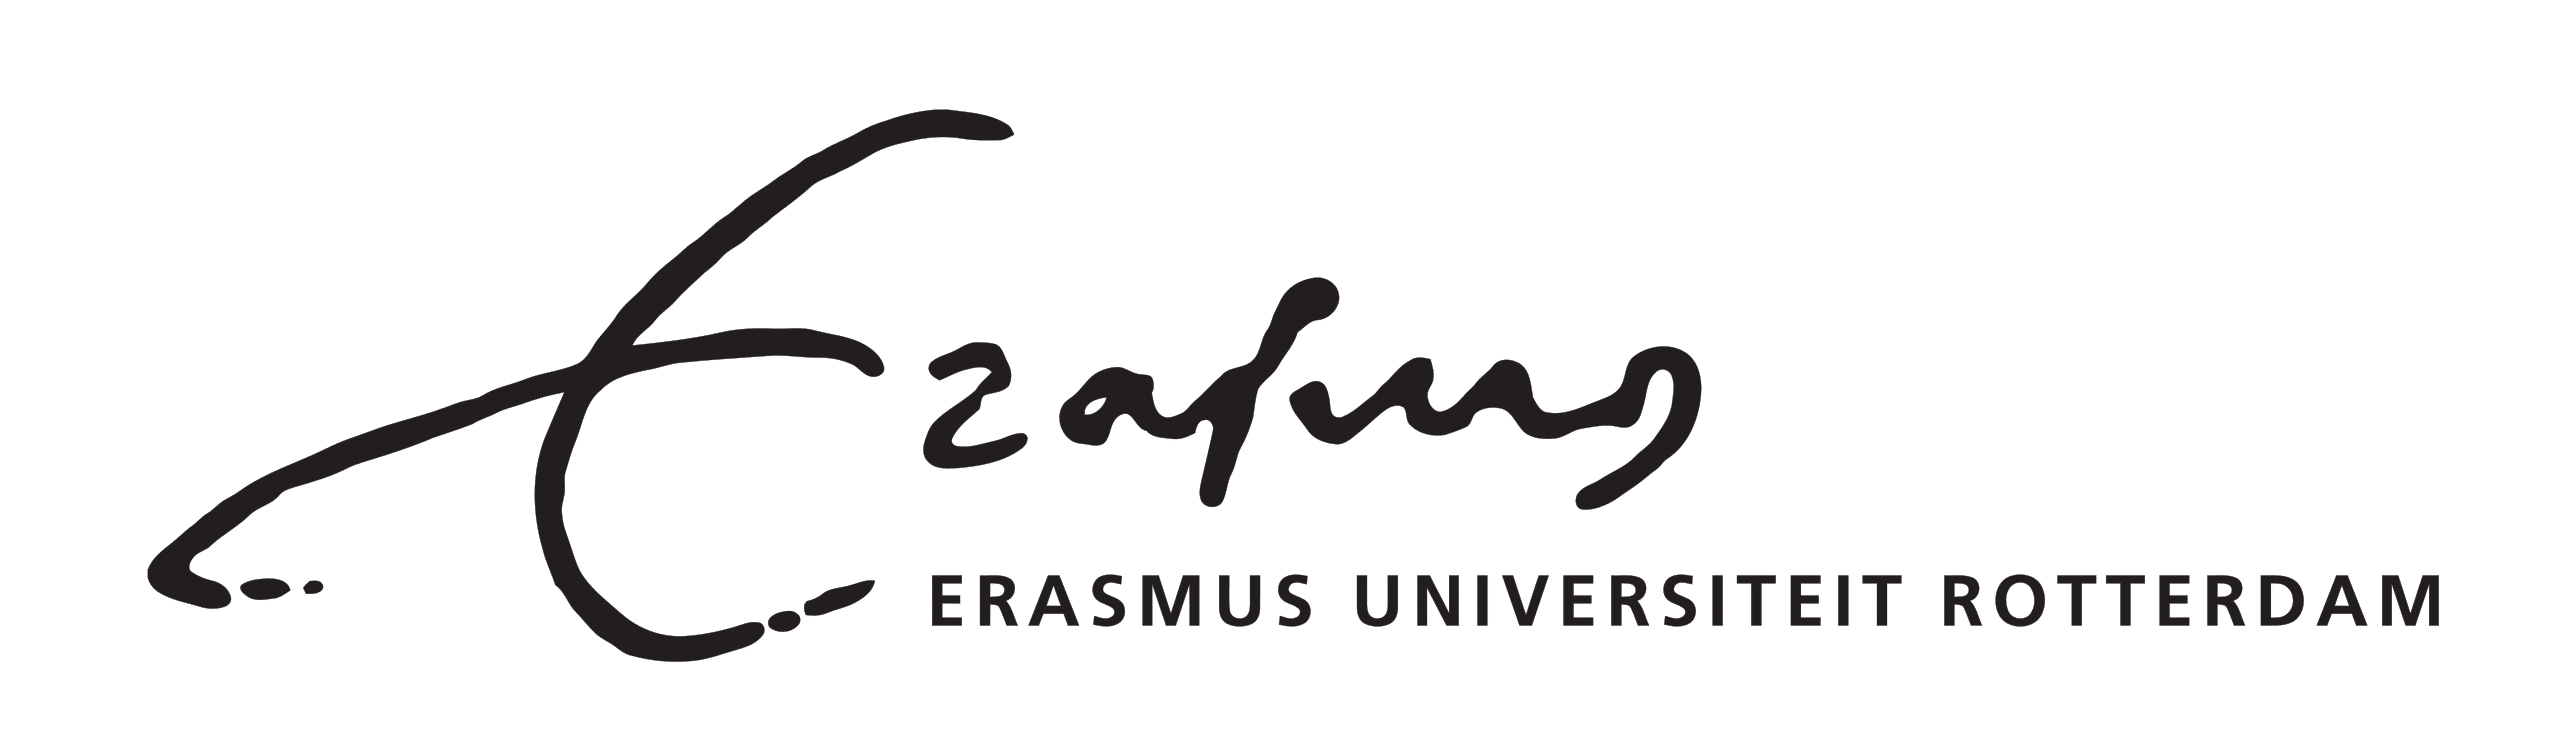 Erasmus_Universiteit_Rotterdam.svg